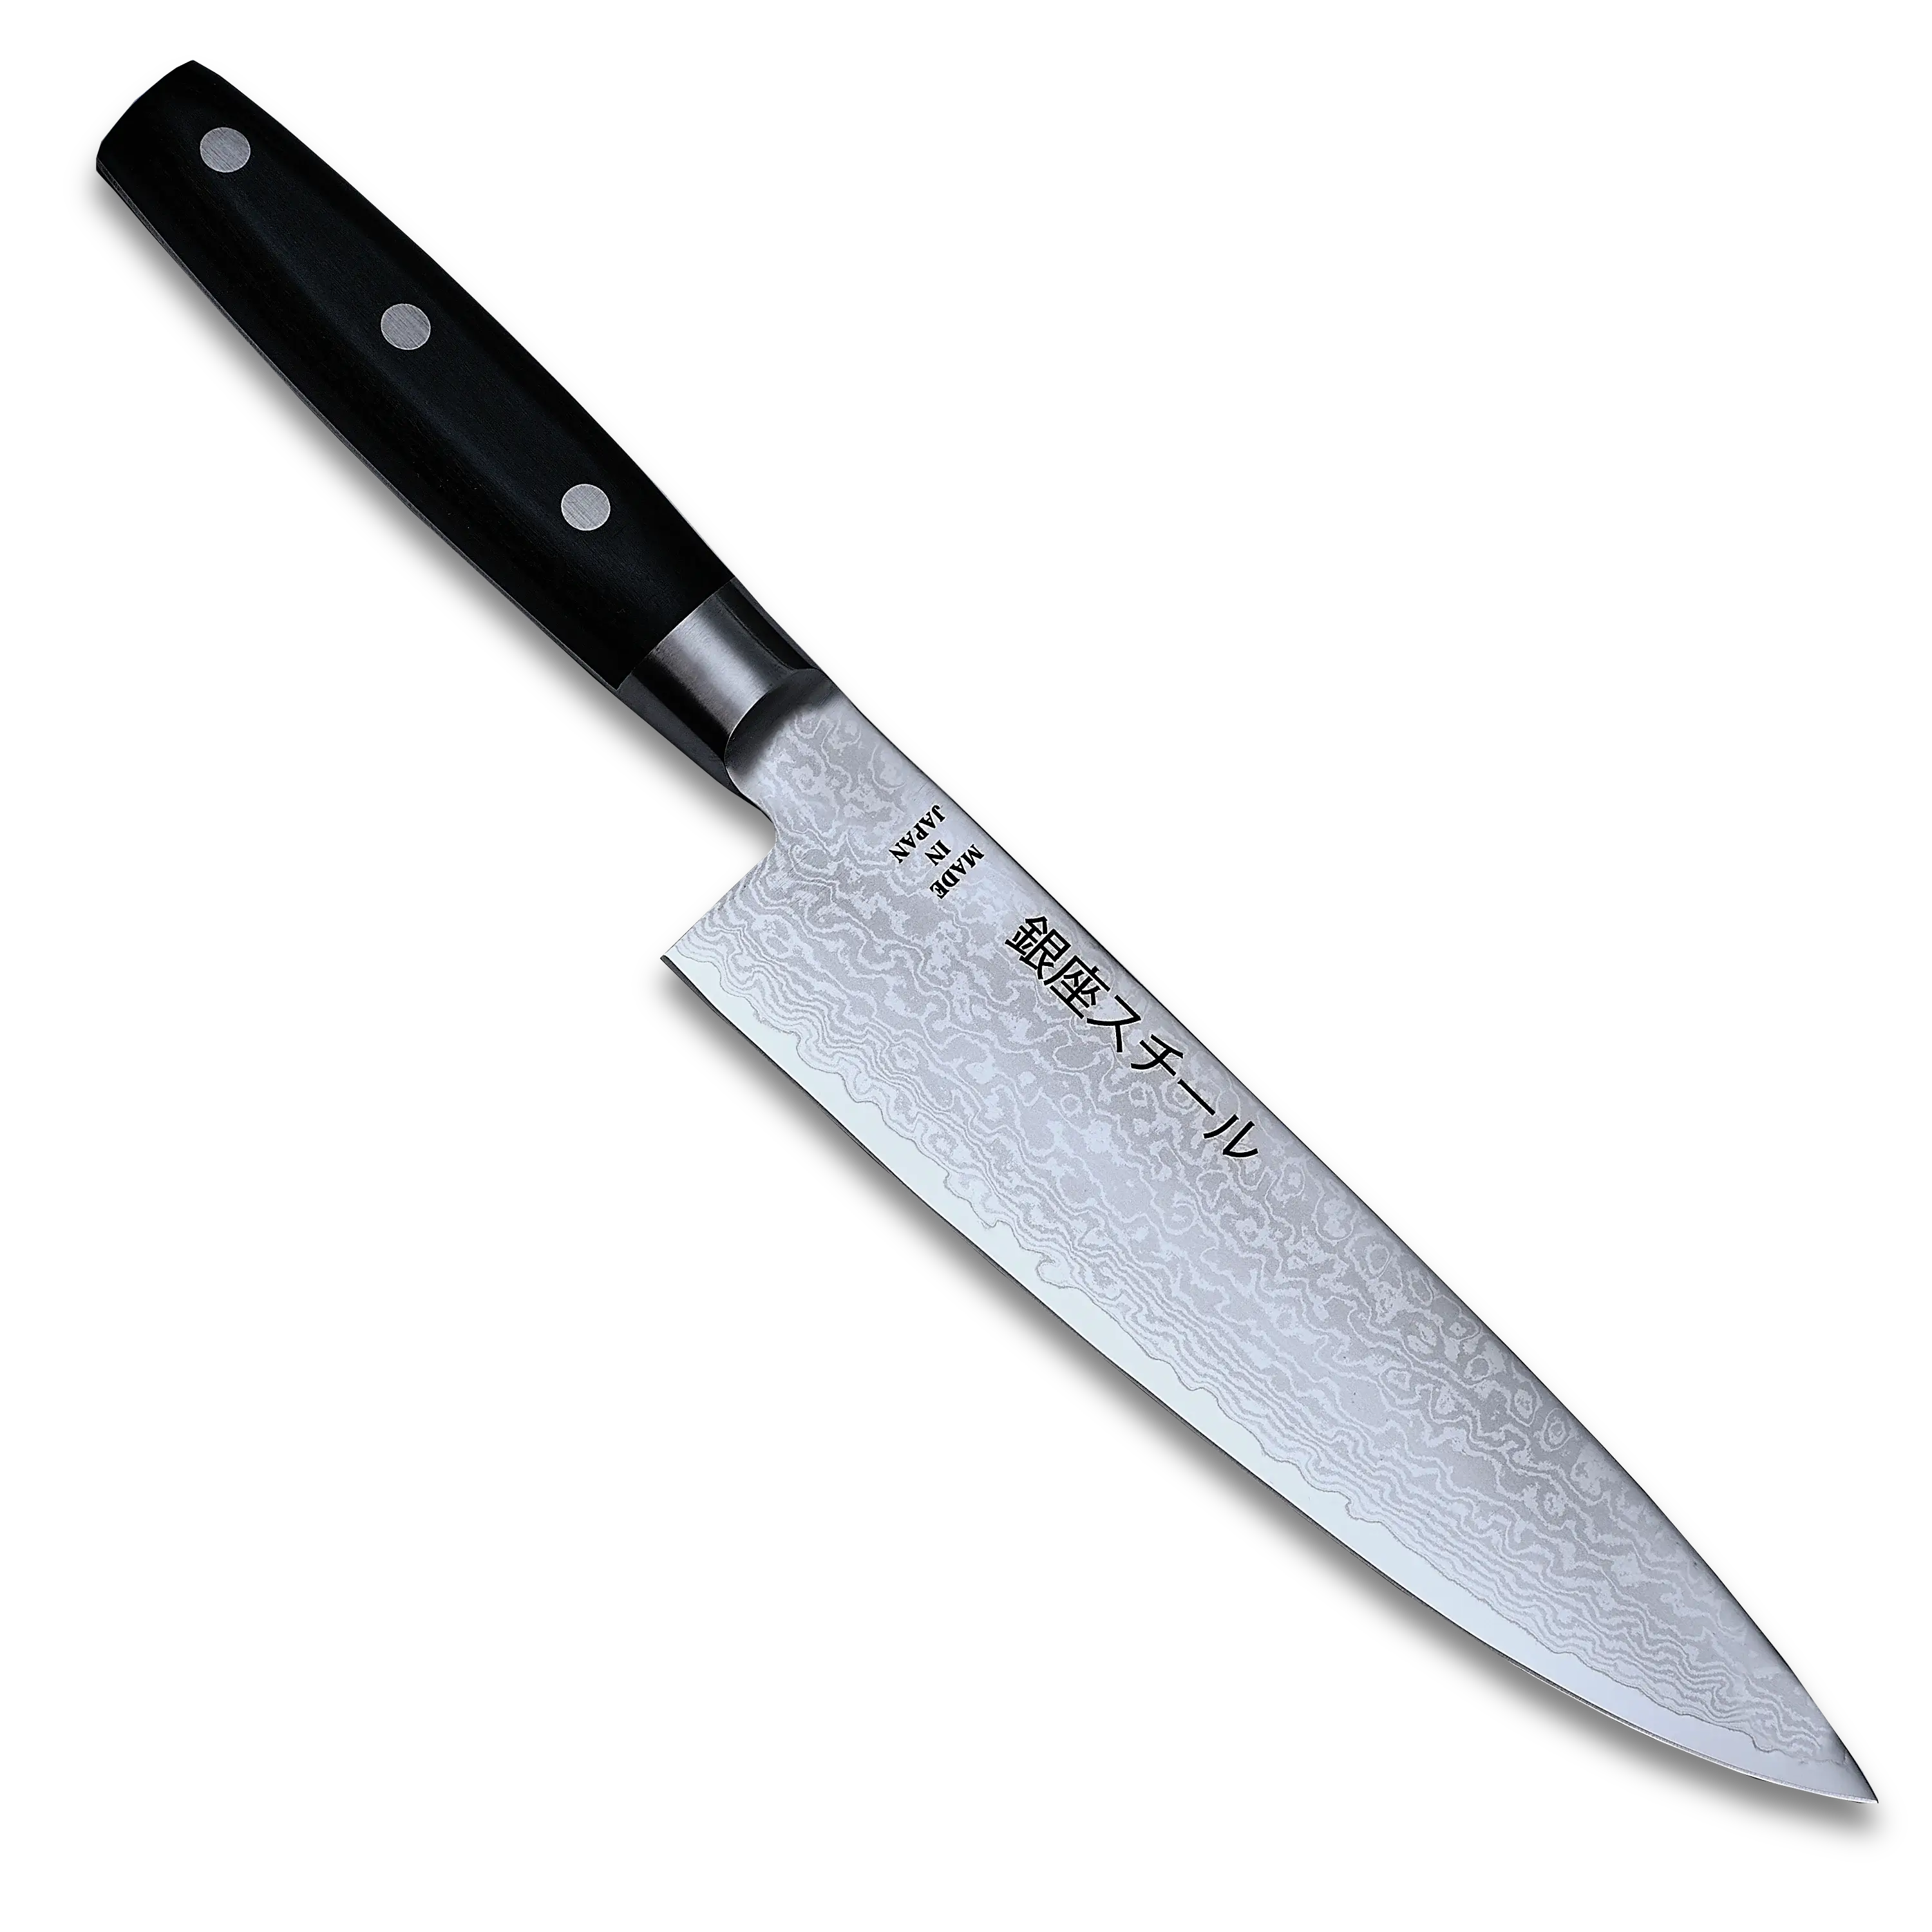 HAYAMI 200 - VG10 - 69 Layered Damascus Steel Gyuto/Chef Knife 200mm